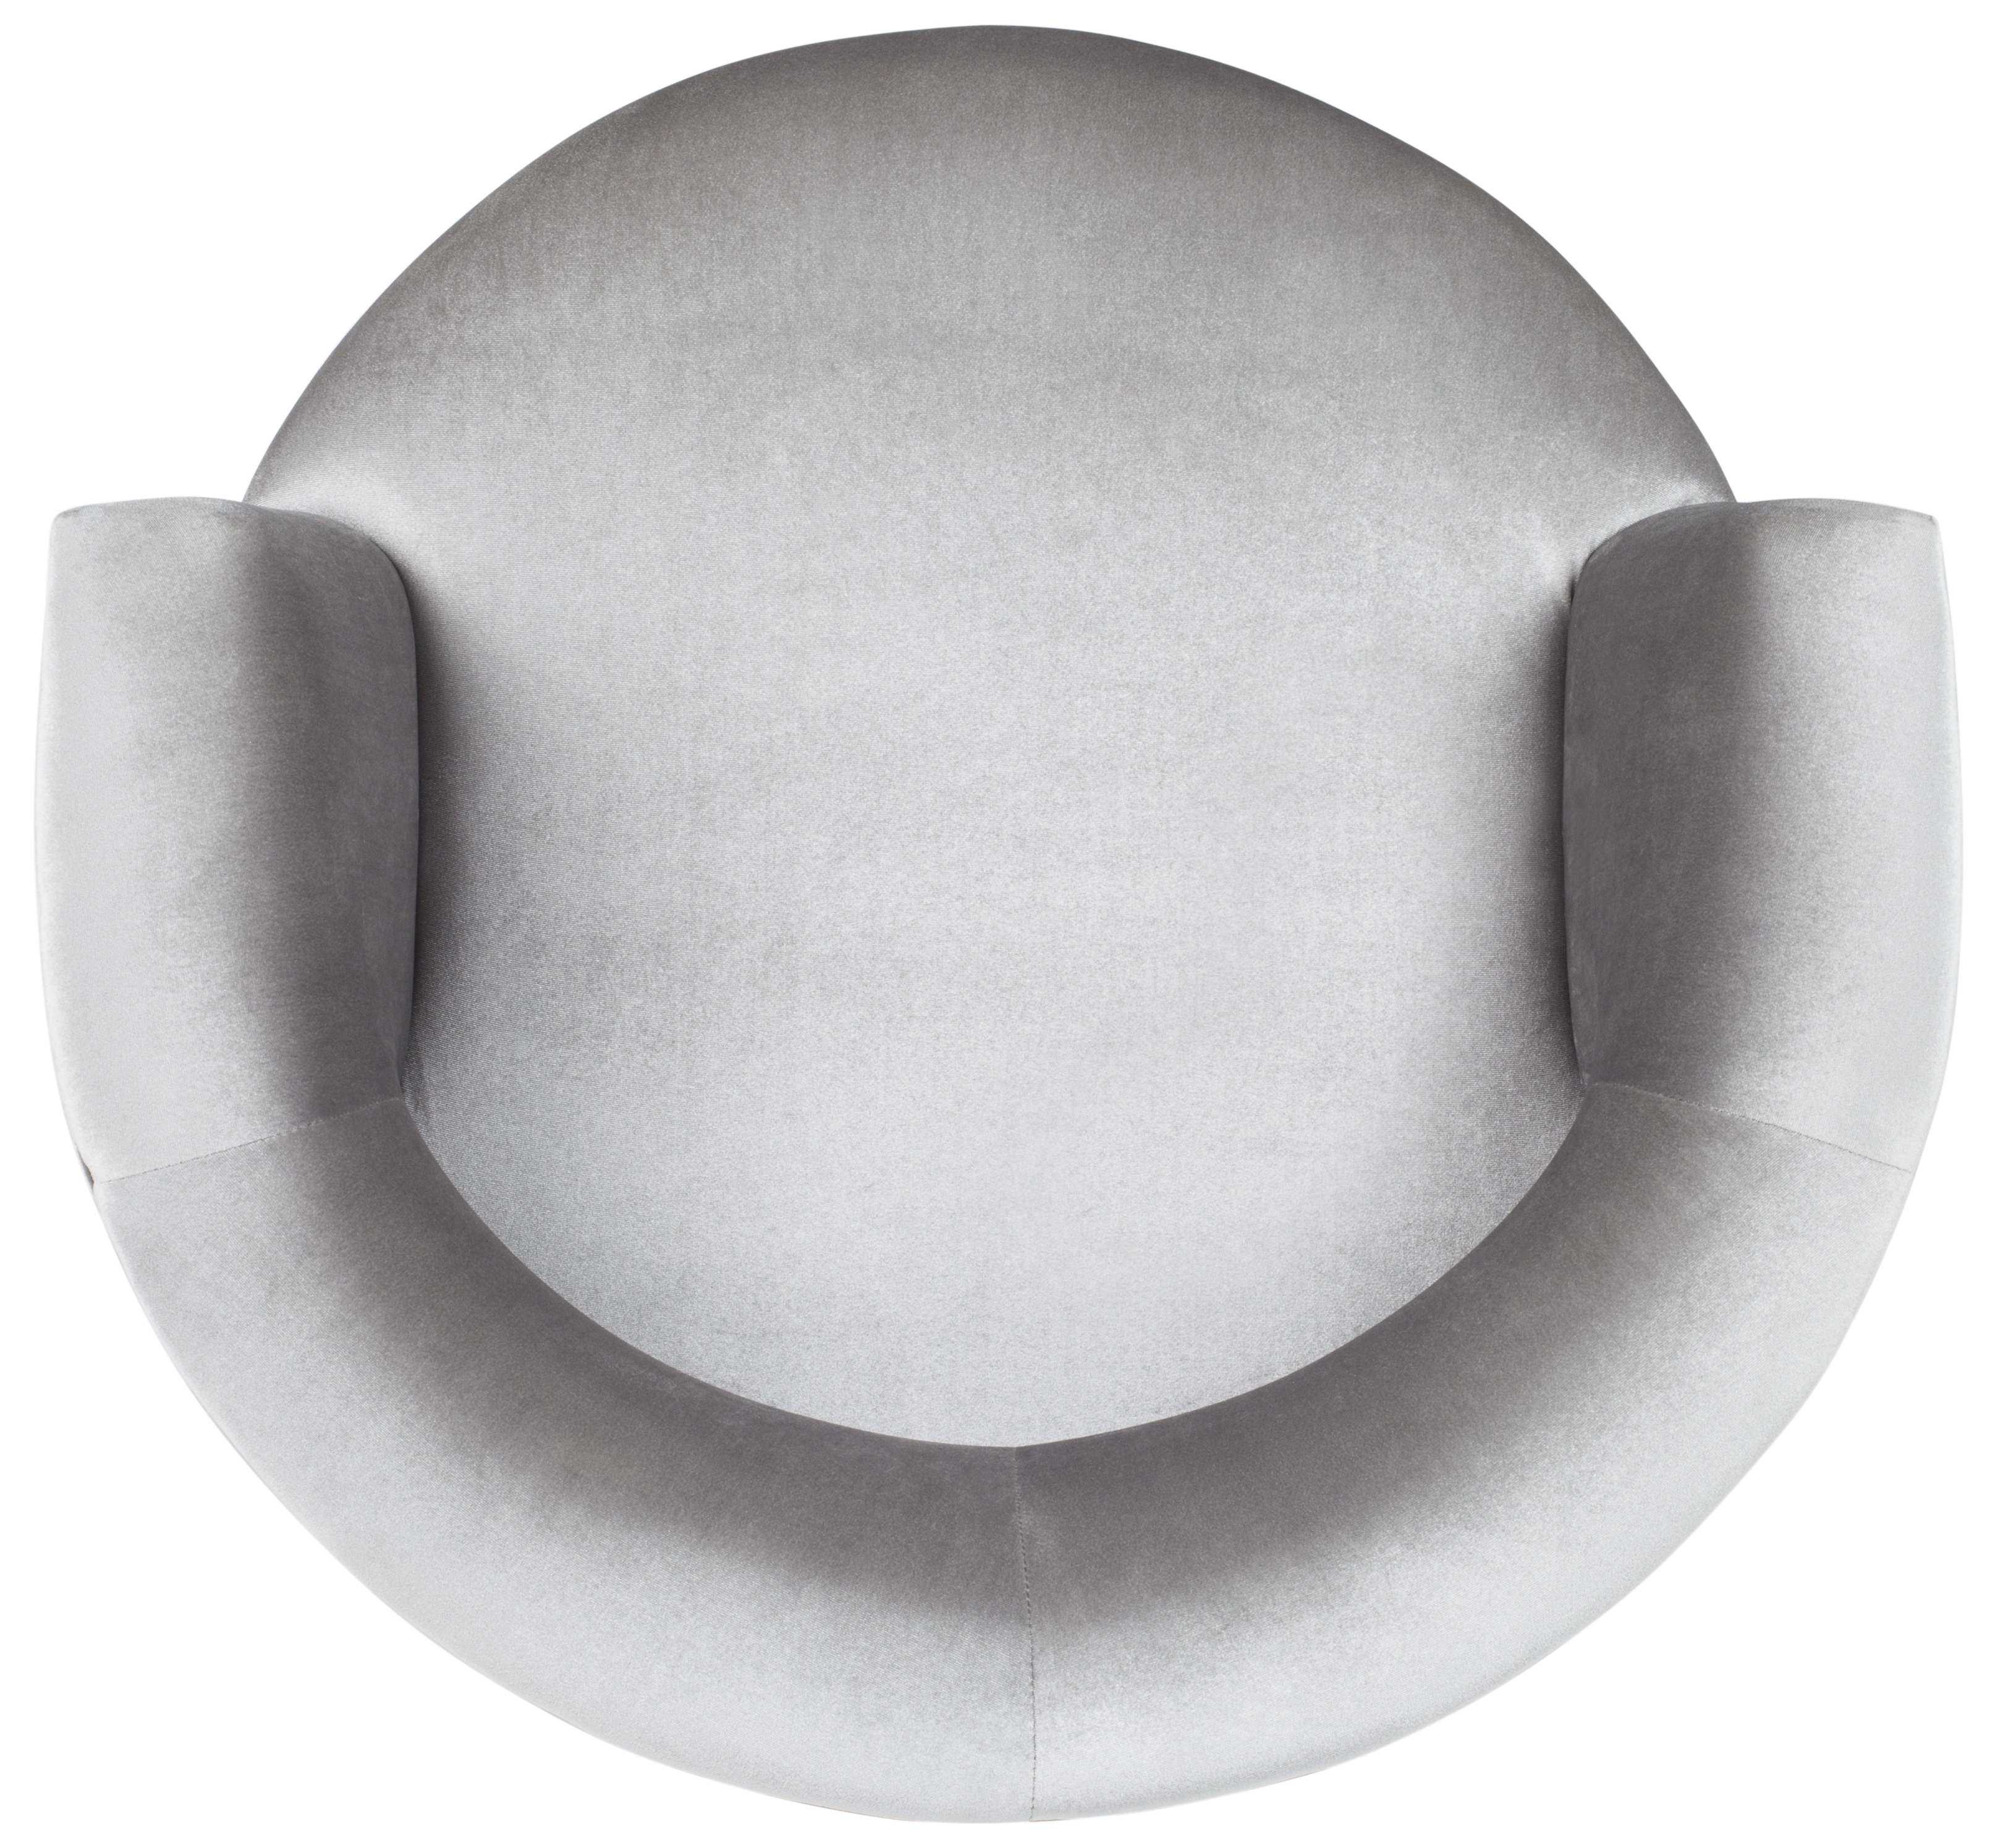 Manet Velvet Retro Mid Century Accent Chair - Light Grey - Arlo Home - Image 1